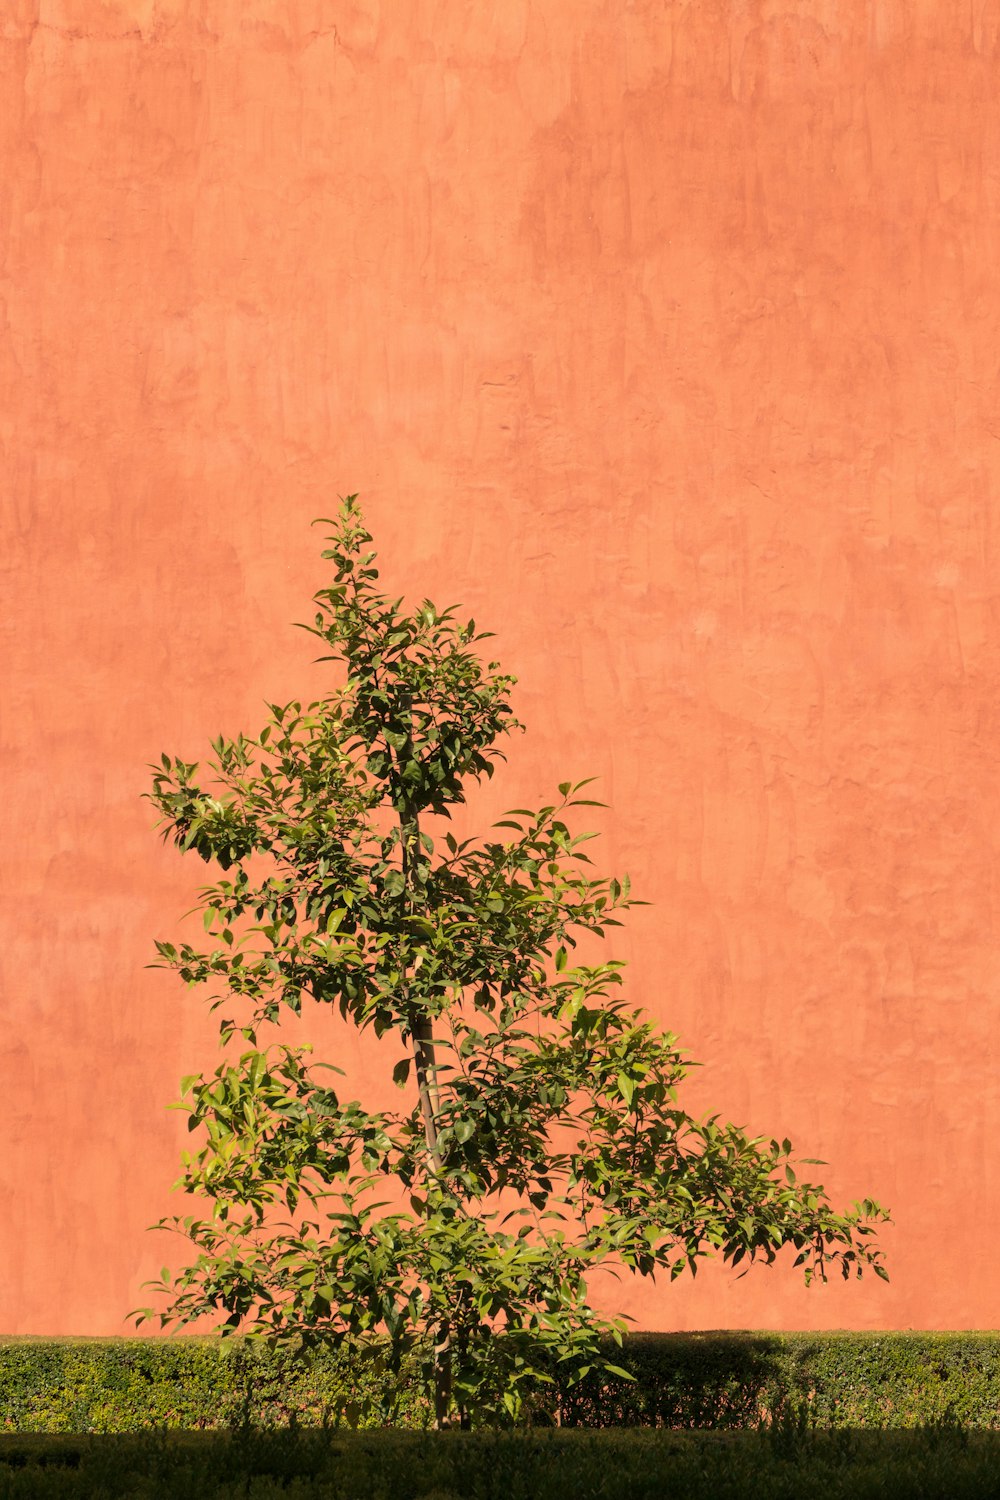 green and brown tree beside orange wall